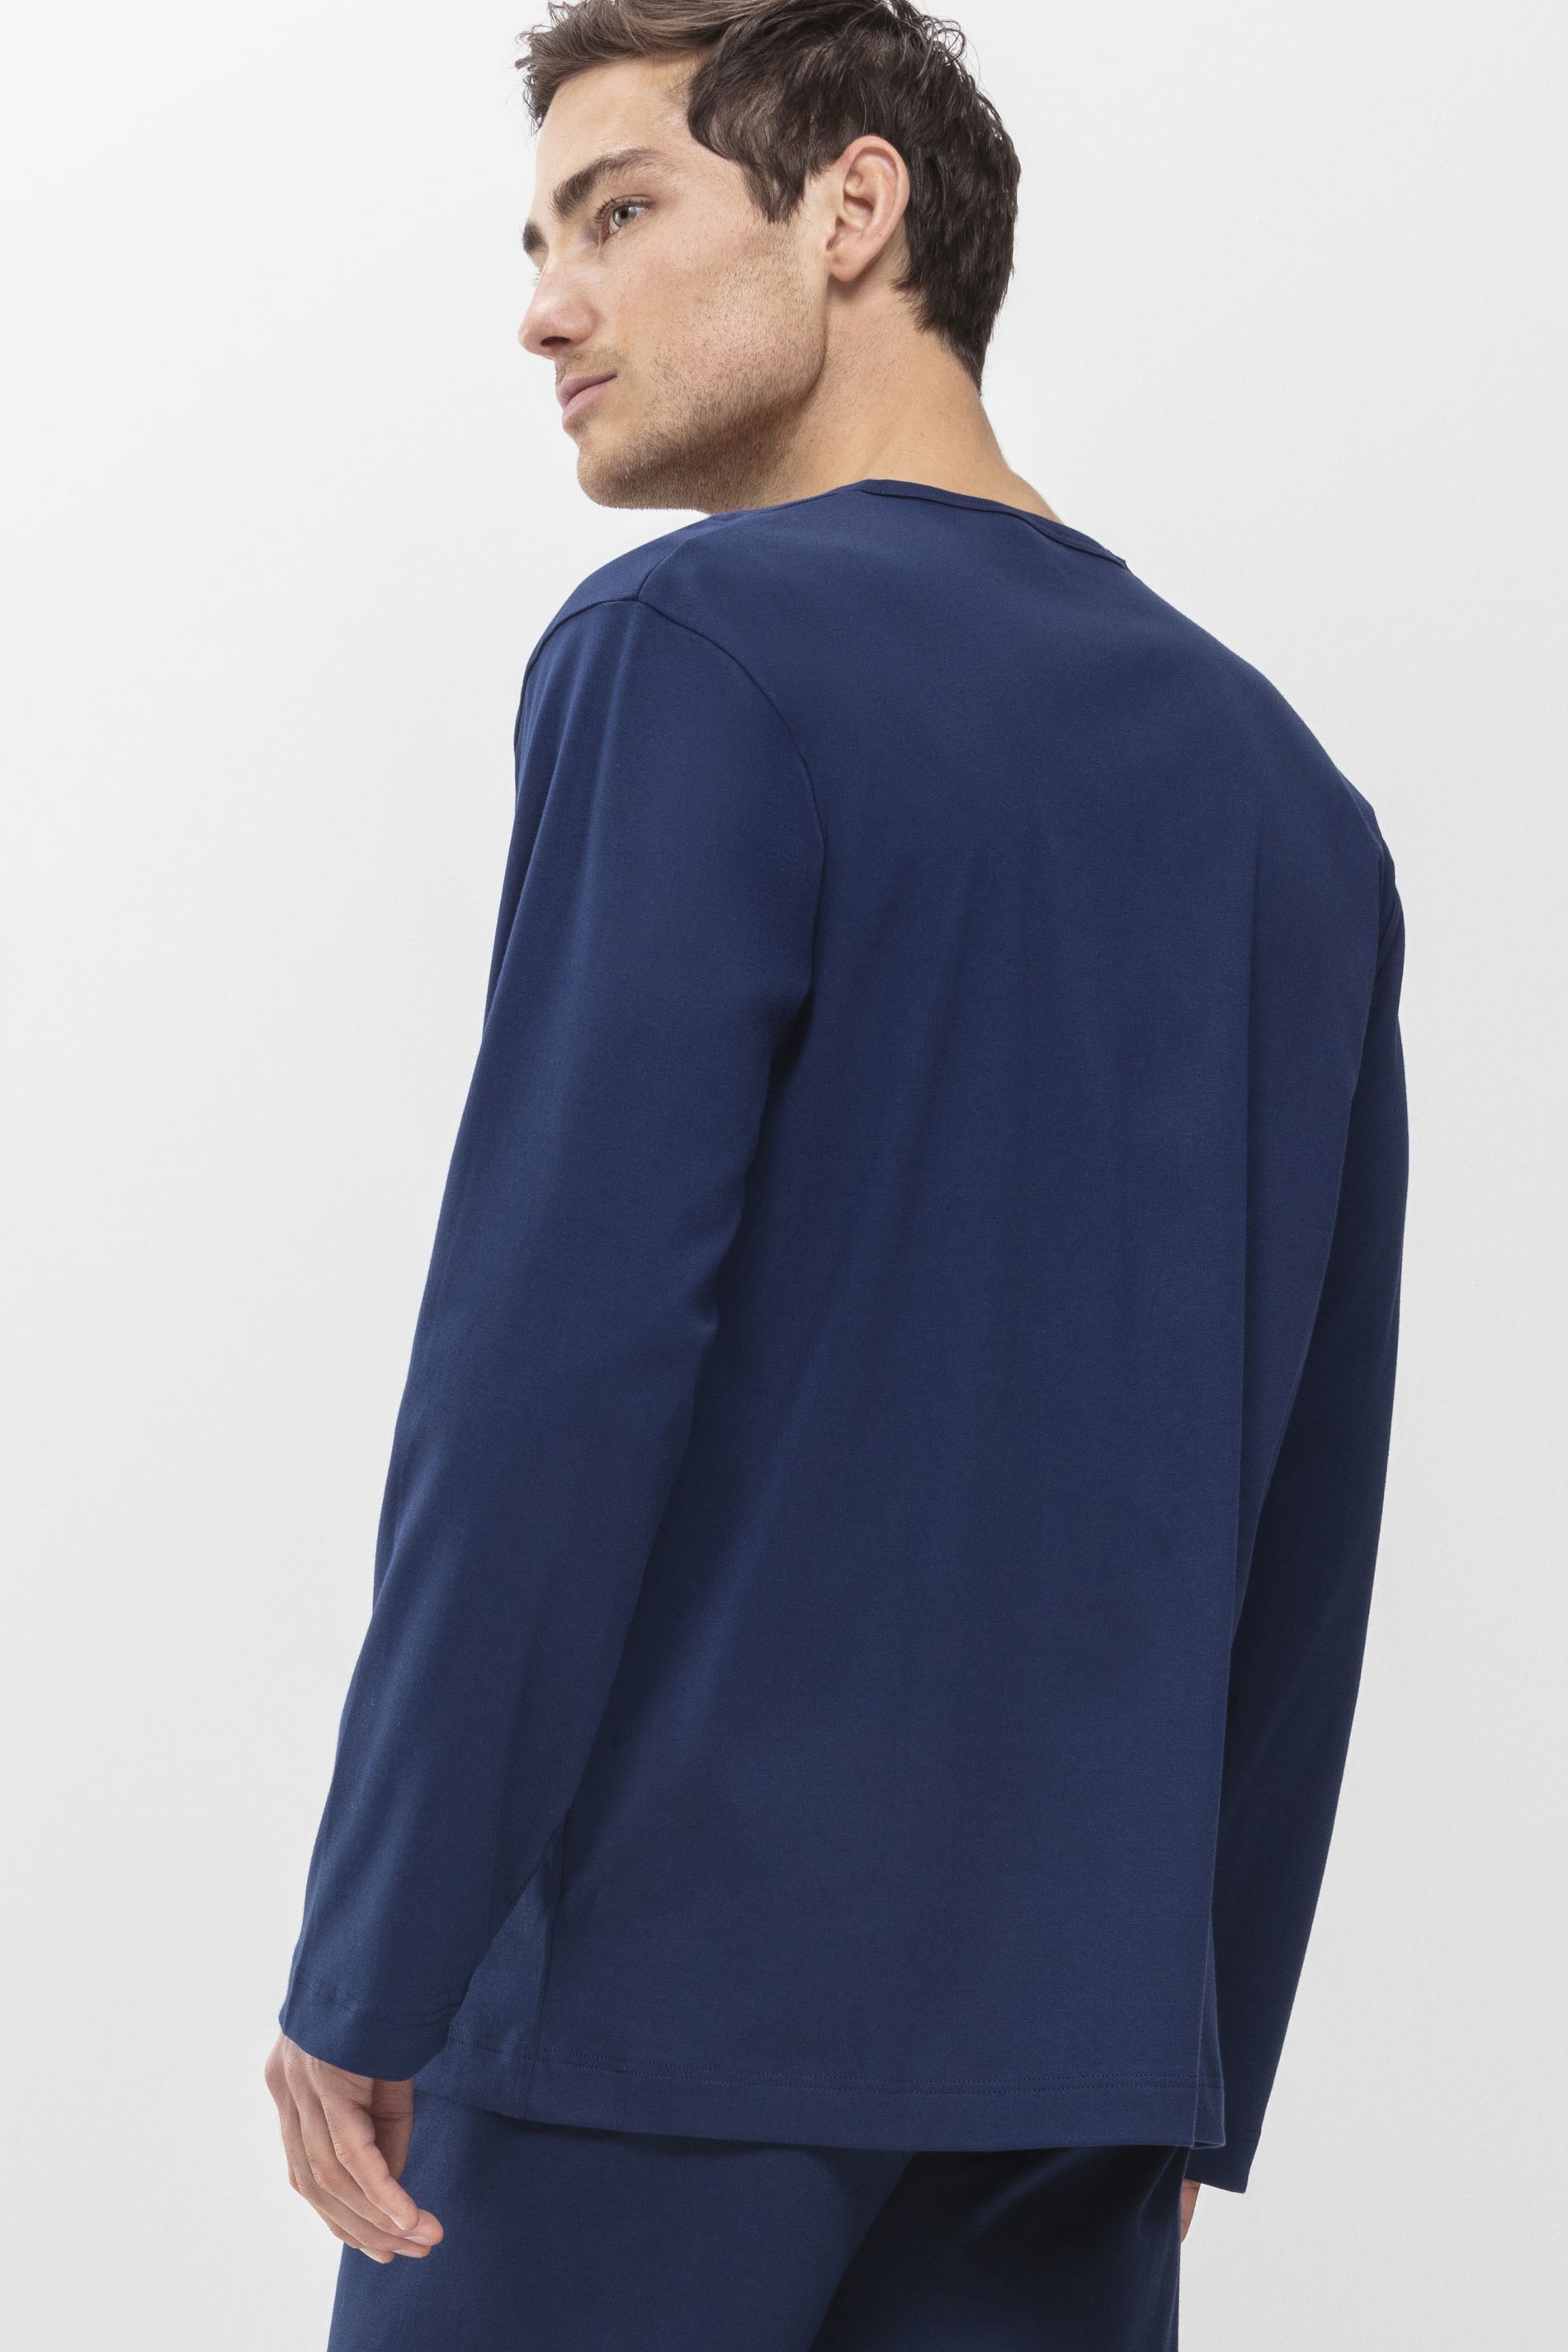 Long-sleeve shirt Neptune Serie Melton Rear View | mey®